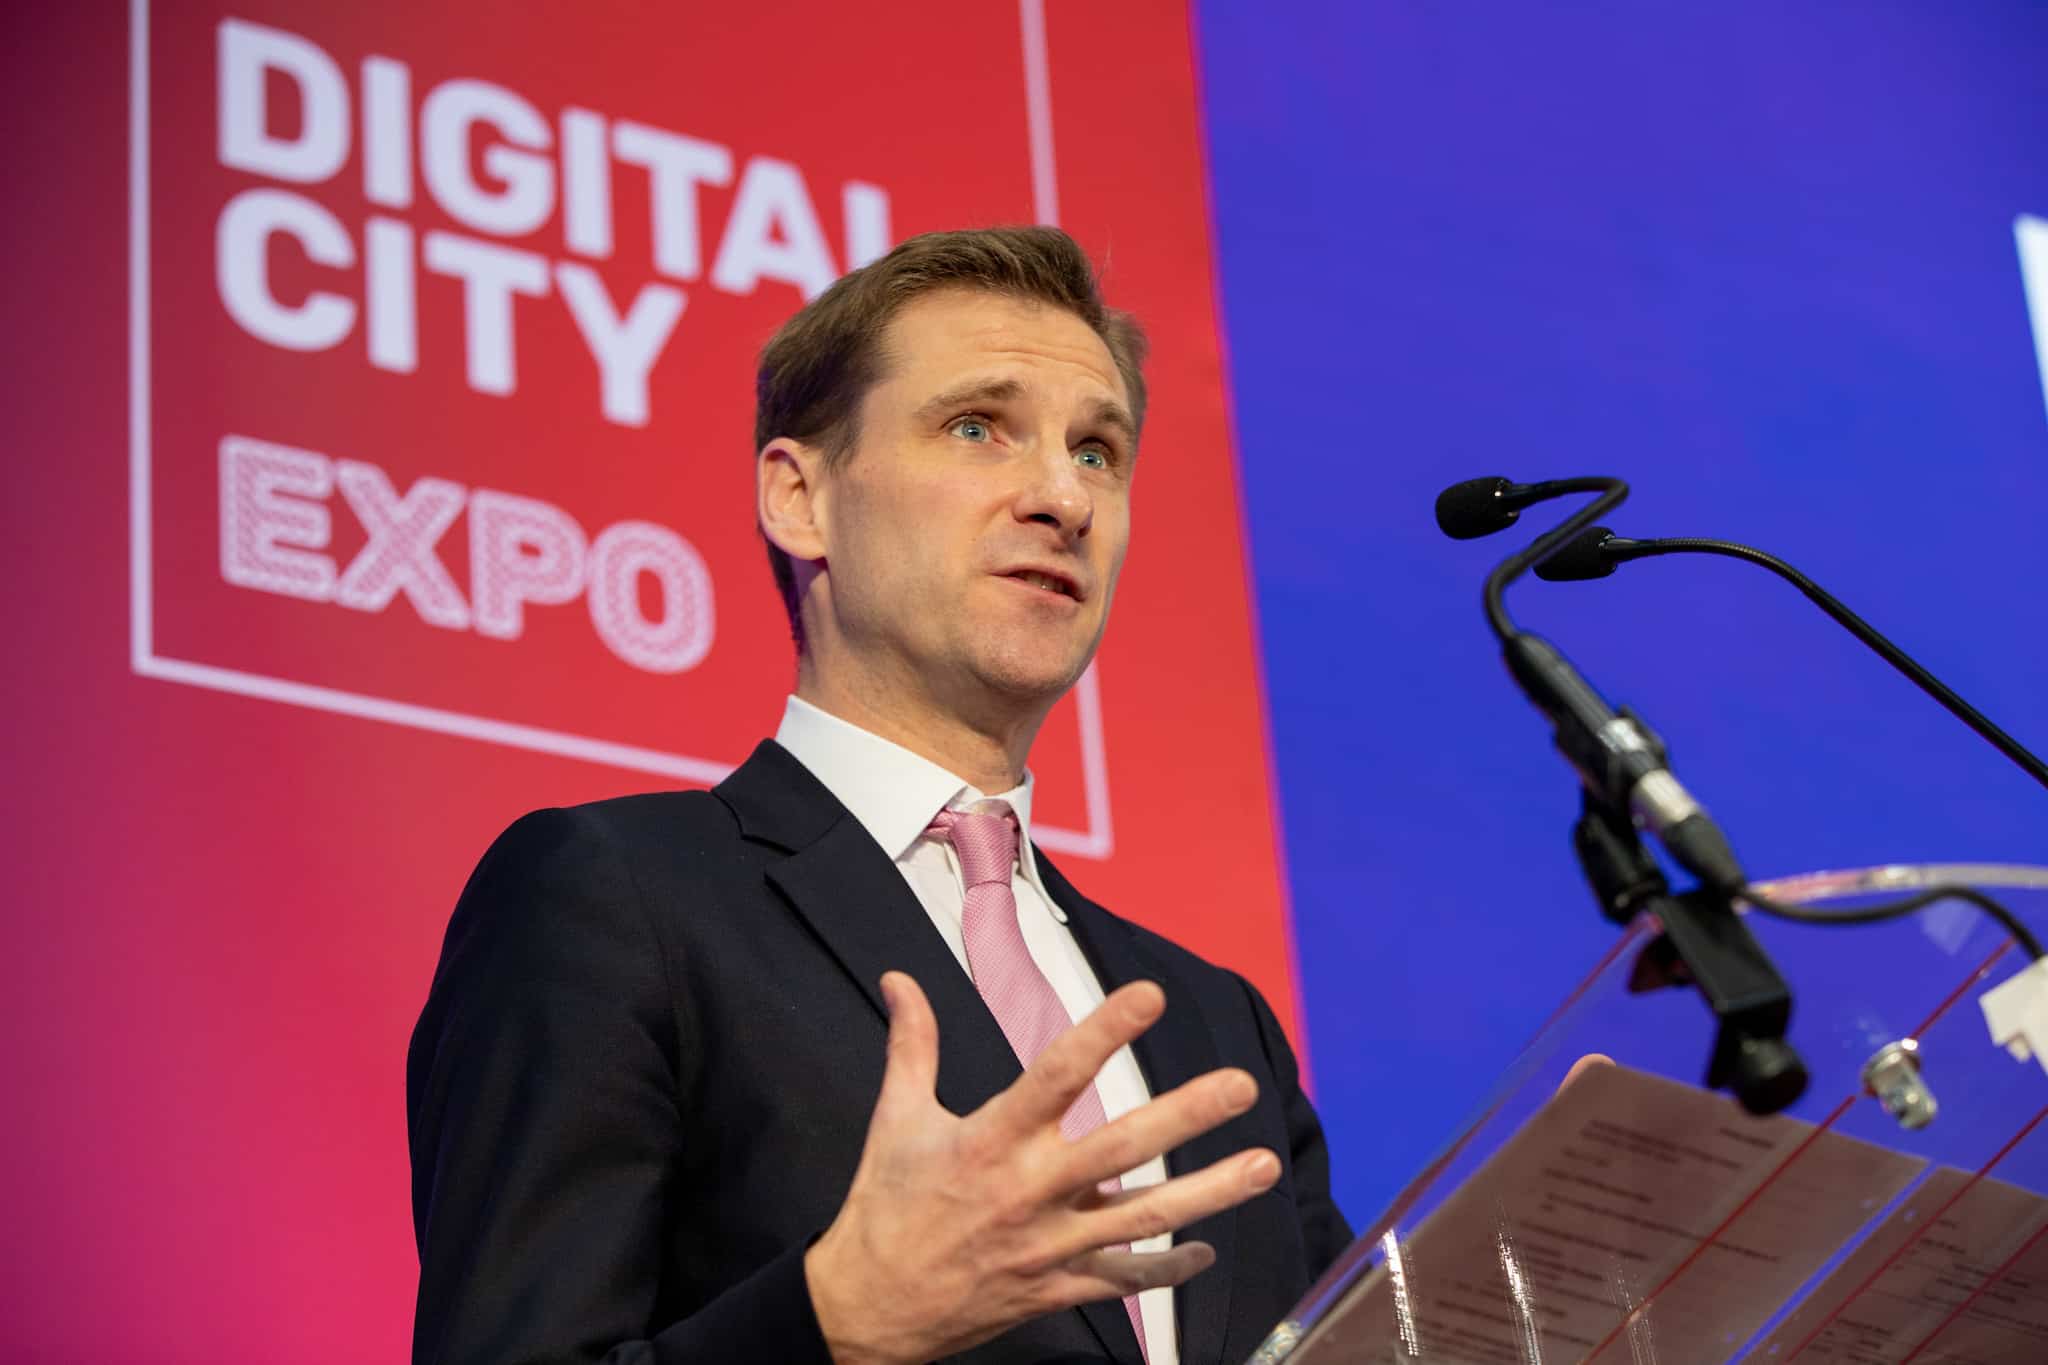 Digital City Expo - Digital Minister Chris Philp